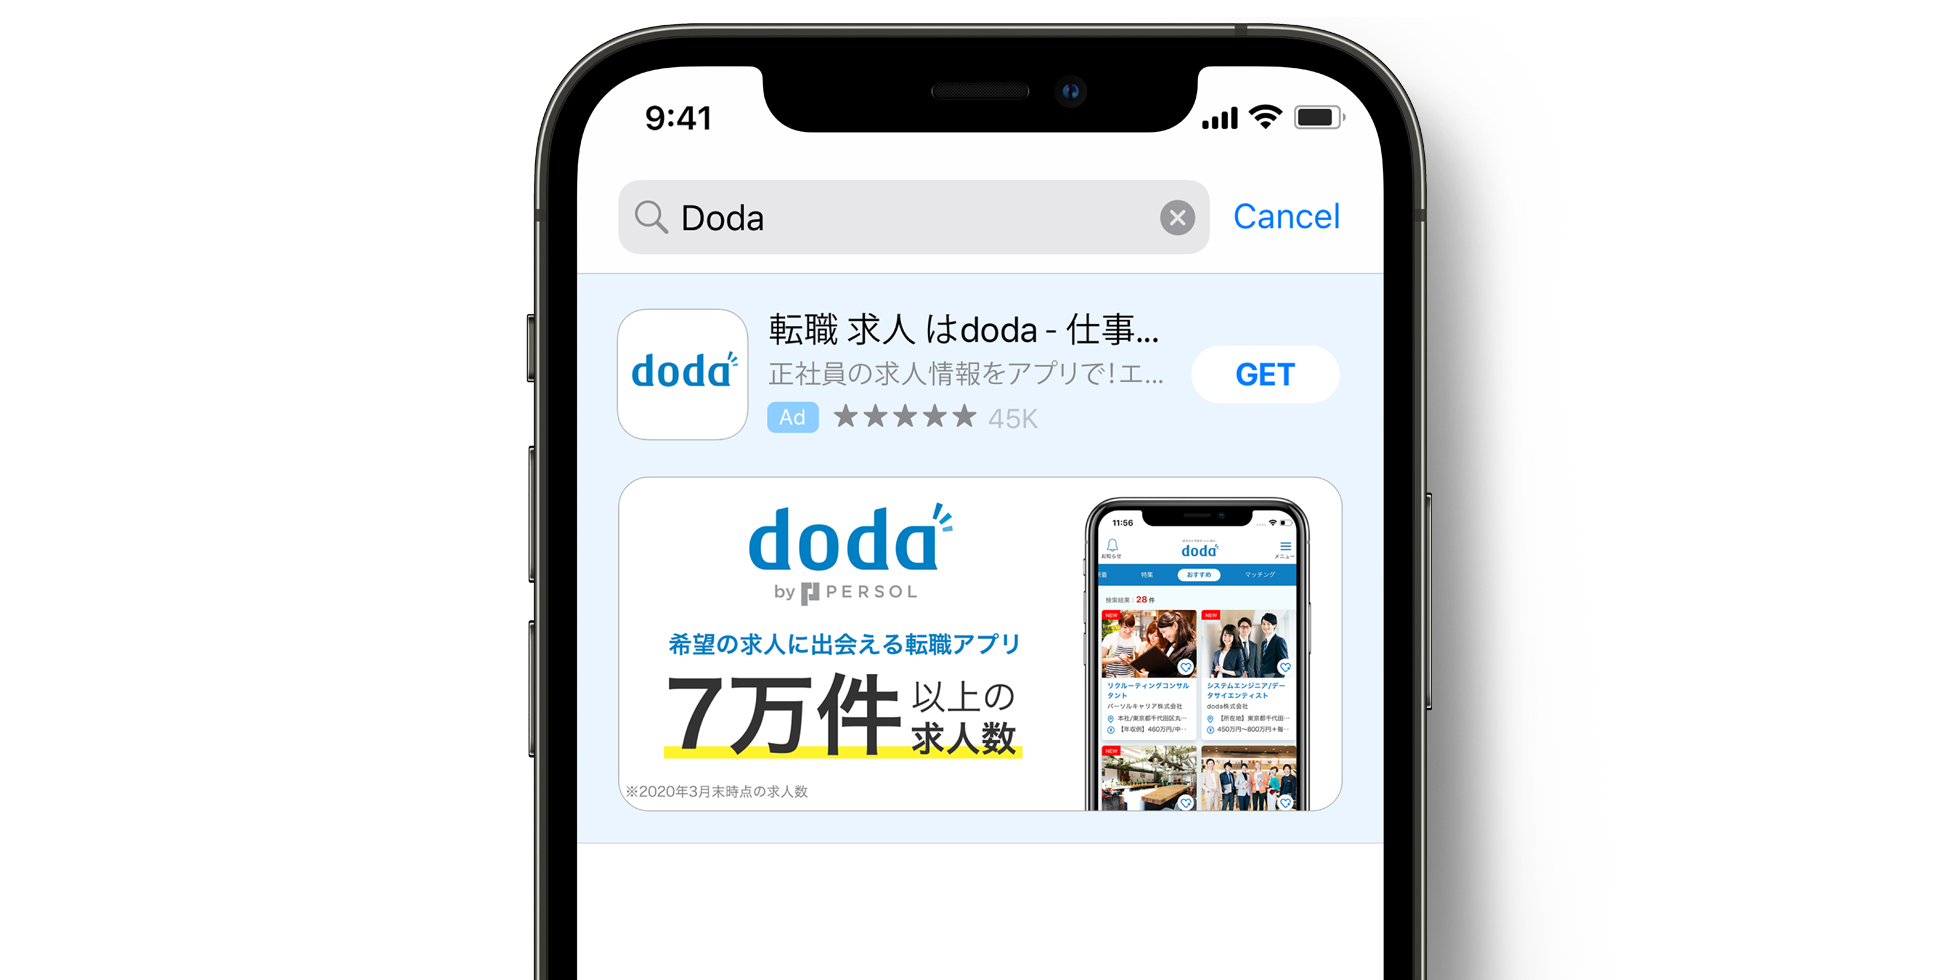 doda ad on the App Store 